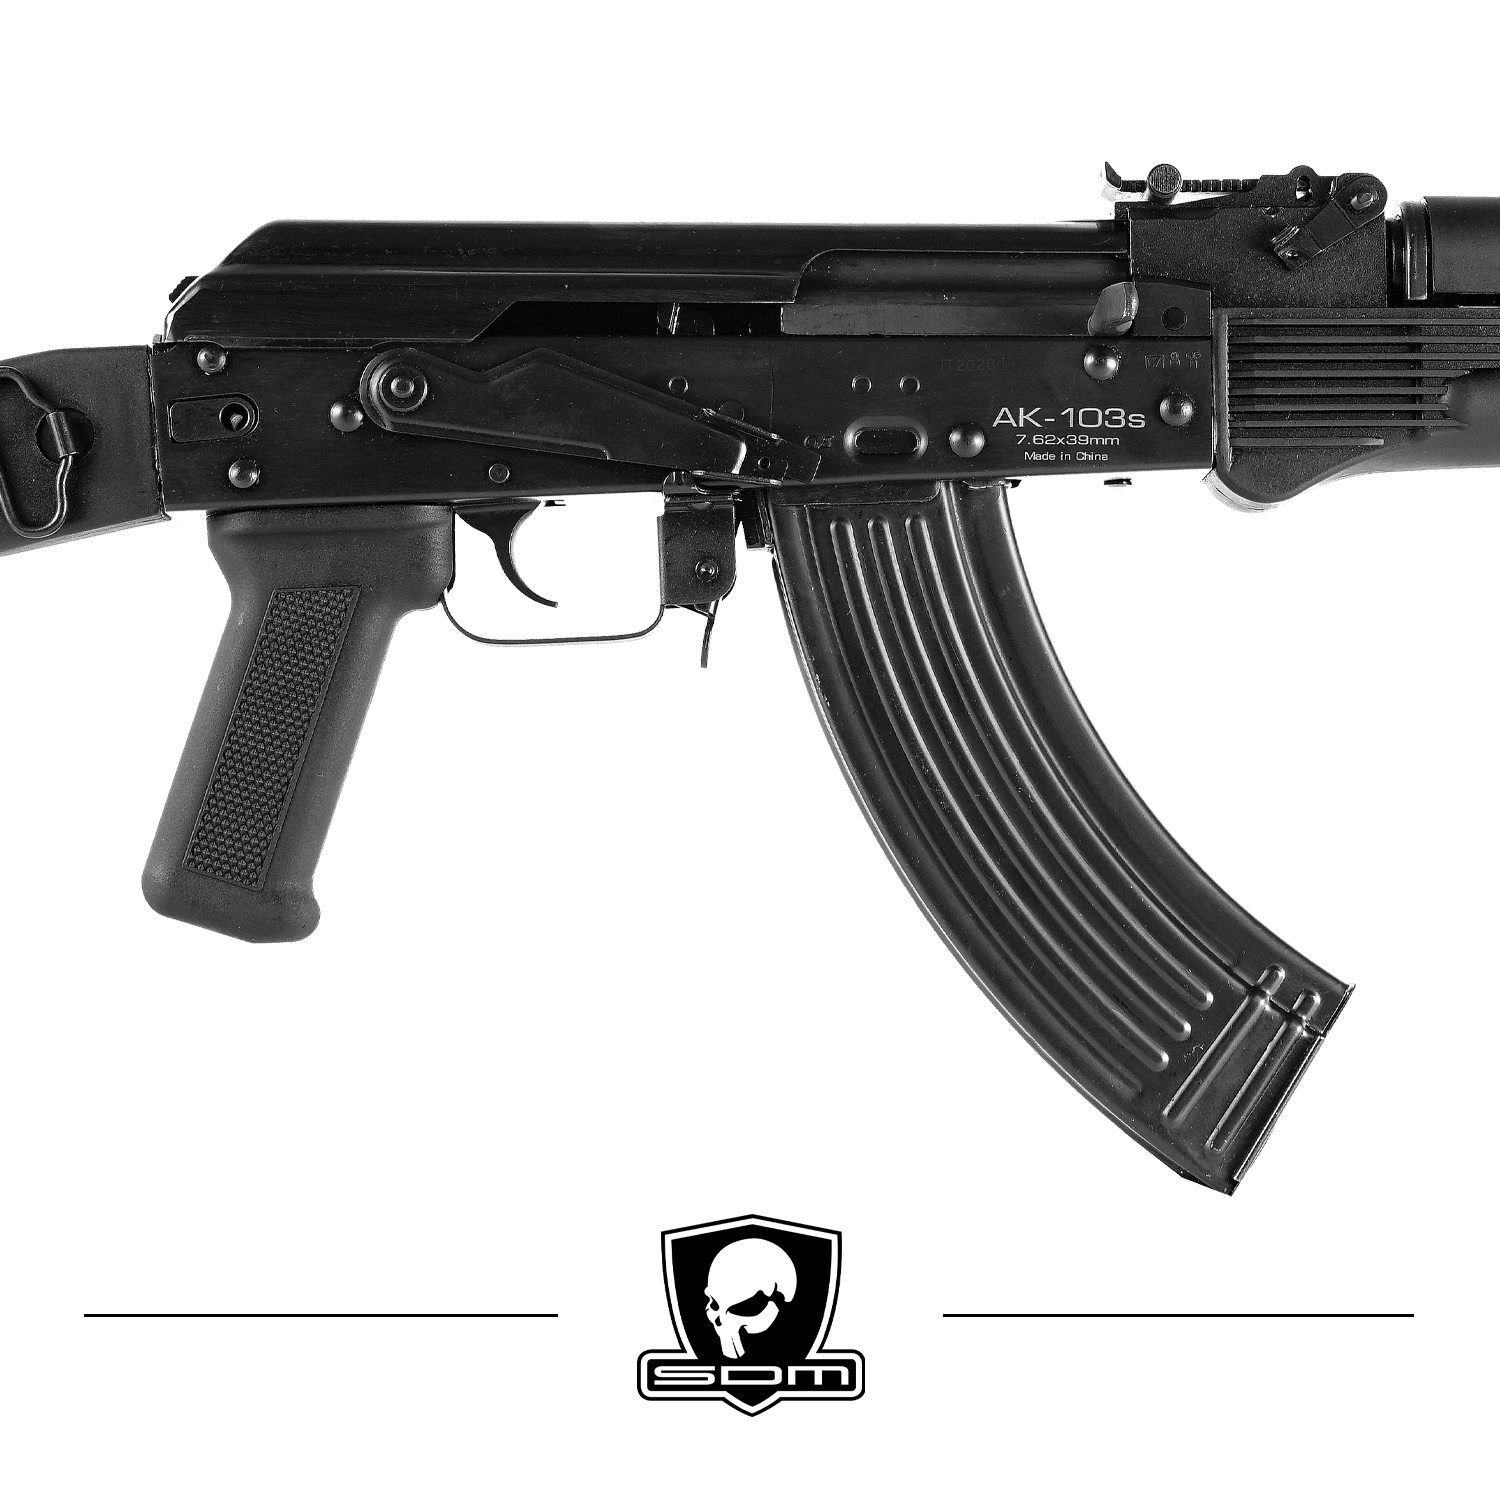 SDM carabina semiauto. mod.  AK-103 cal. 7,62x39